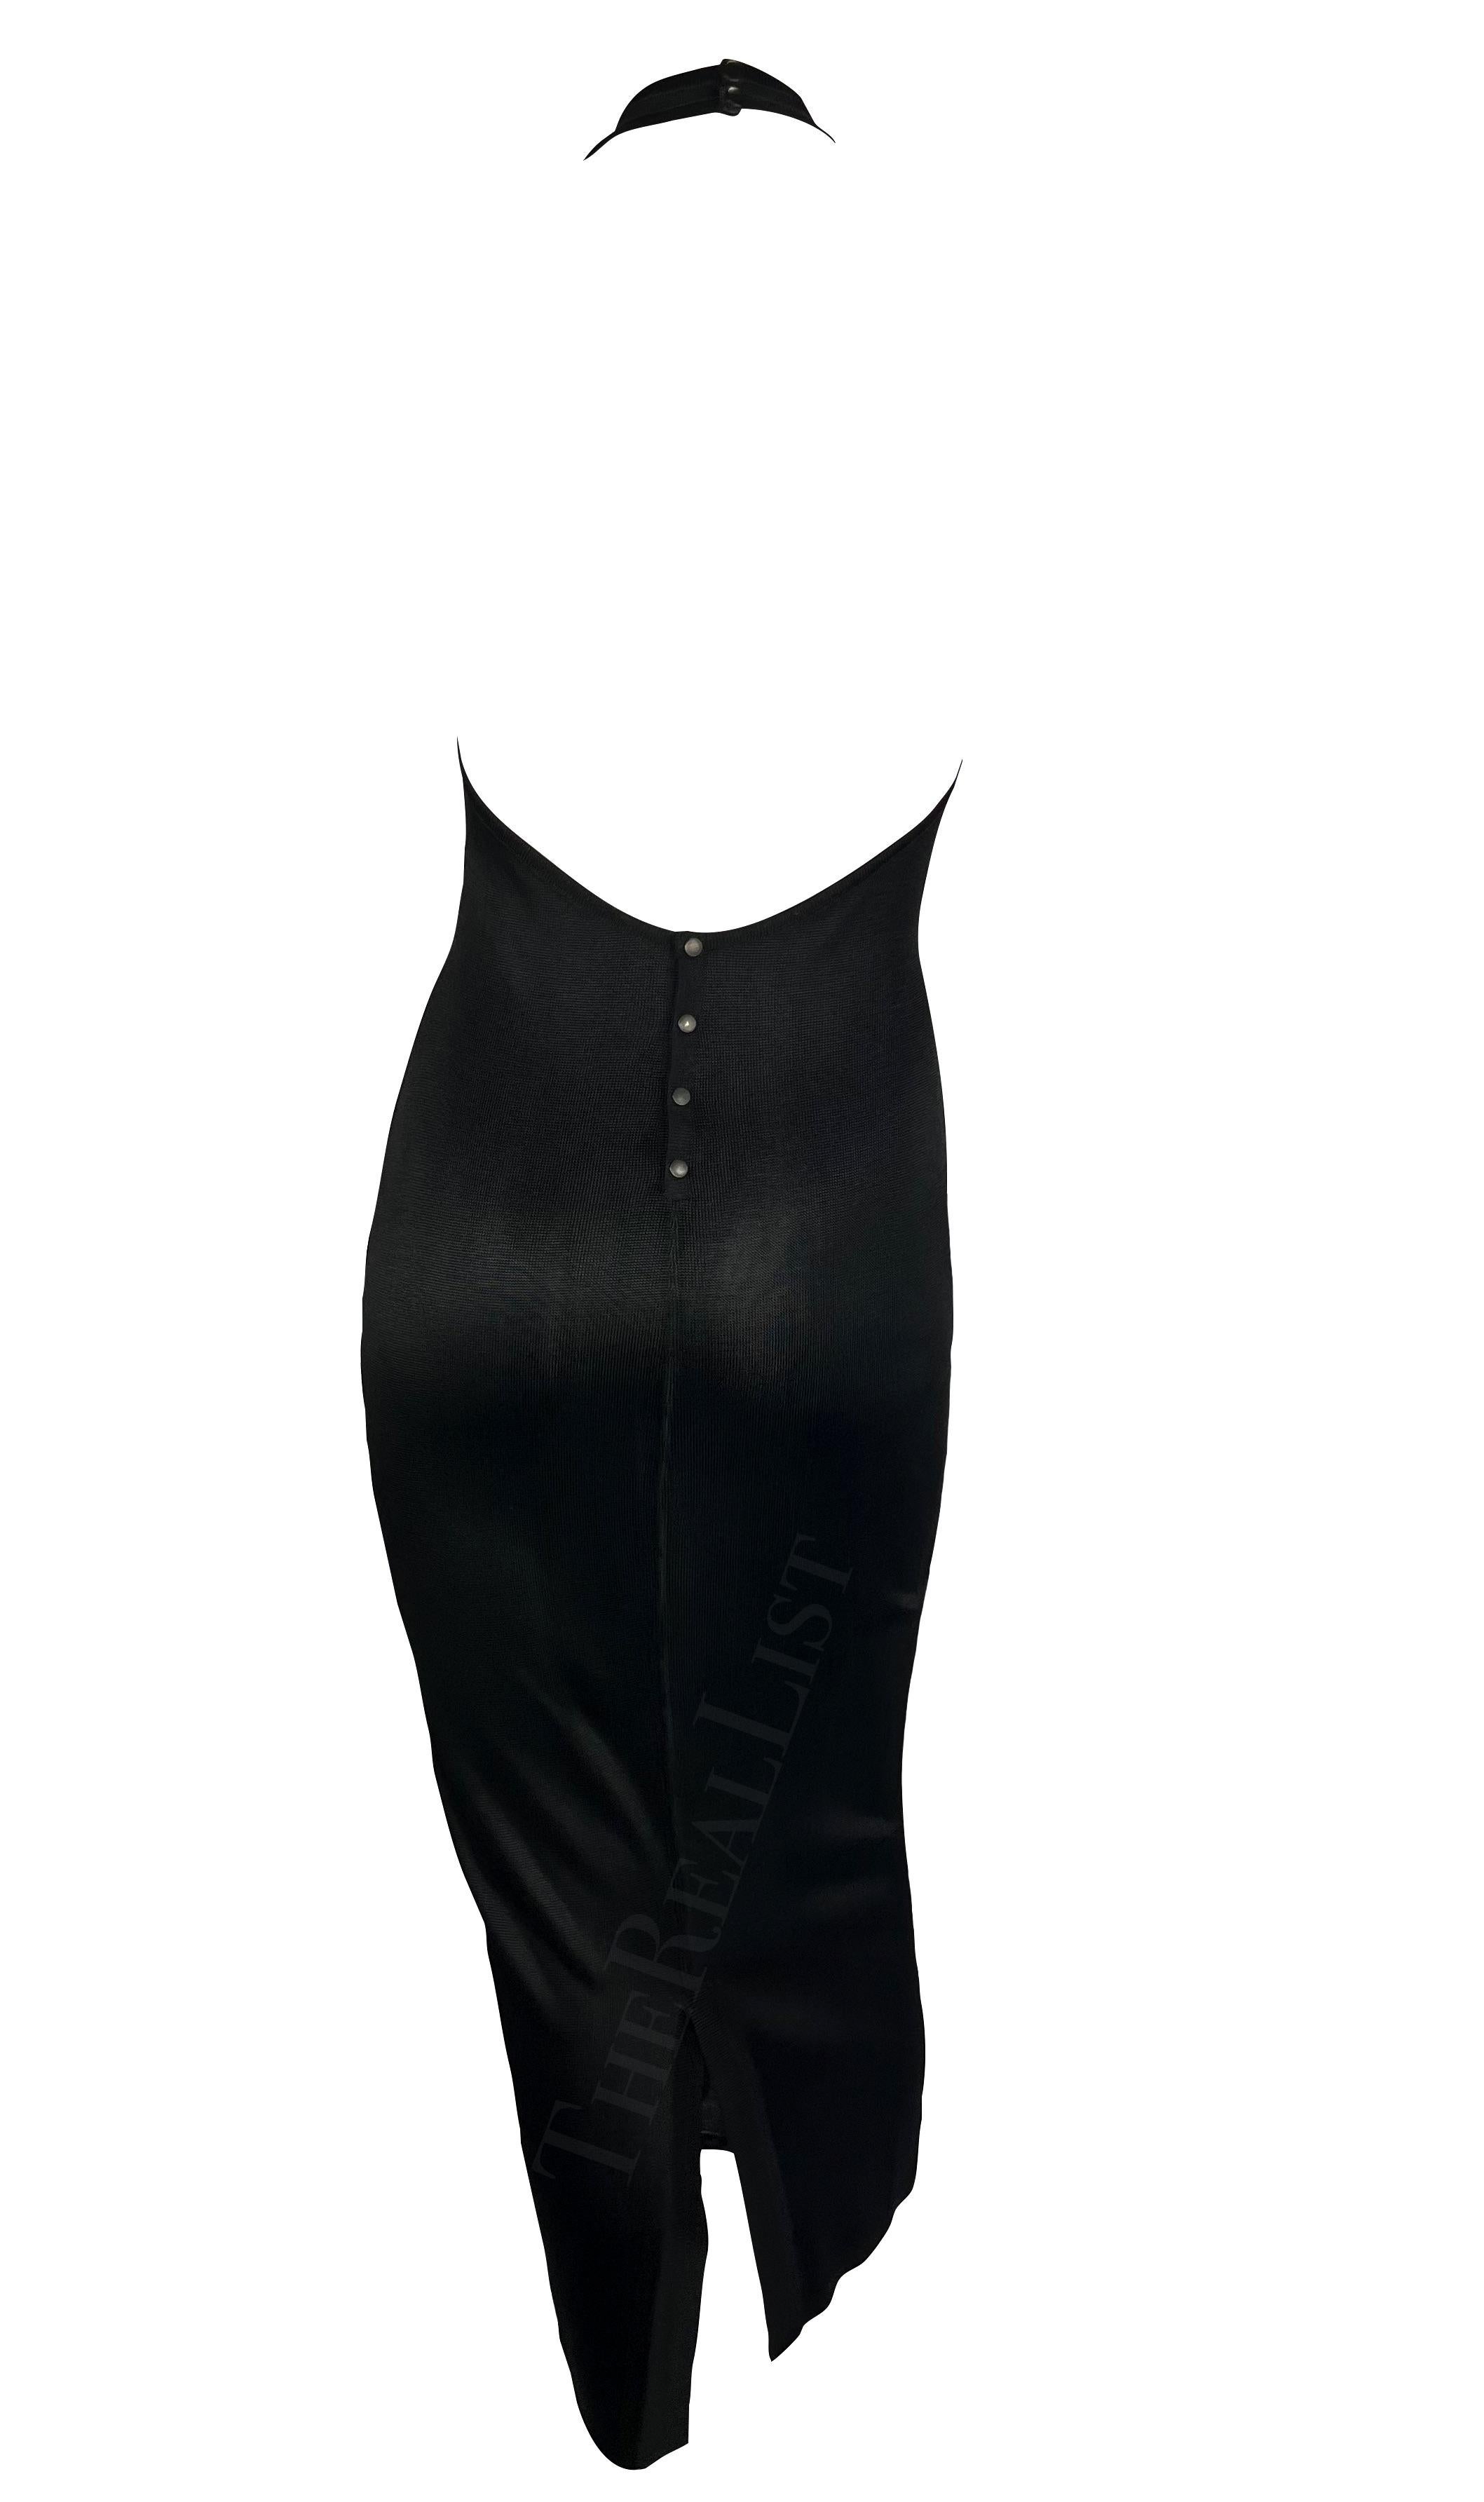 S/S 1986 Azzedine Alaïa Black Knit Halter Neck Bodycon Backless Dress For Sale 4